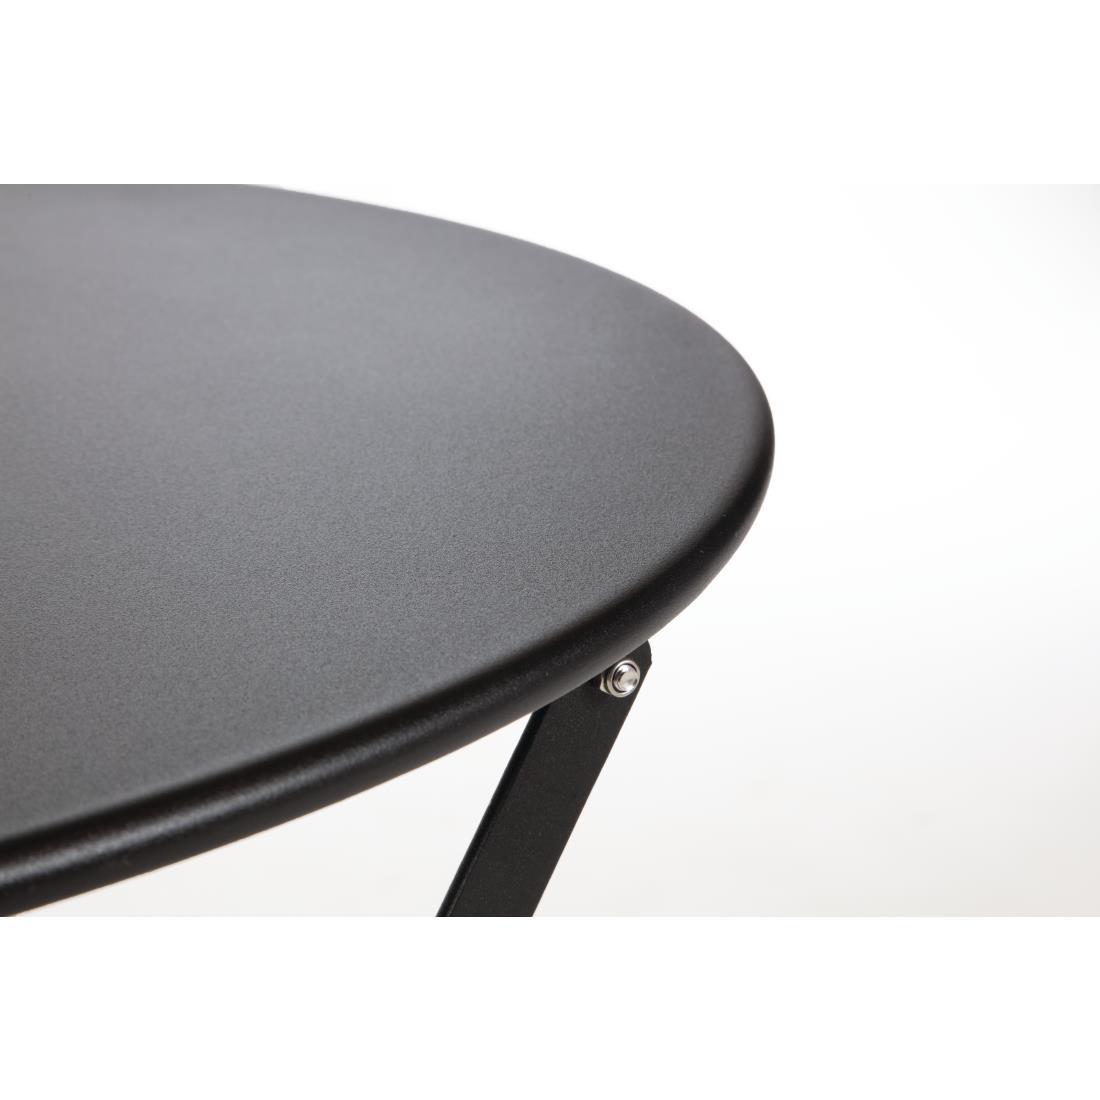 Bolero Black Pavement Style Steel Table 595mm - GH558  - 7